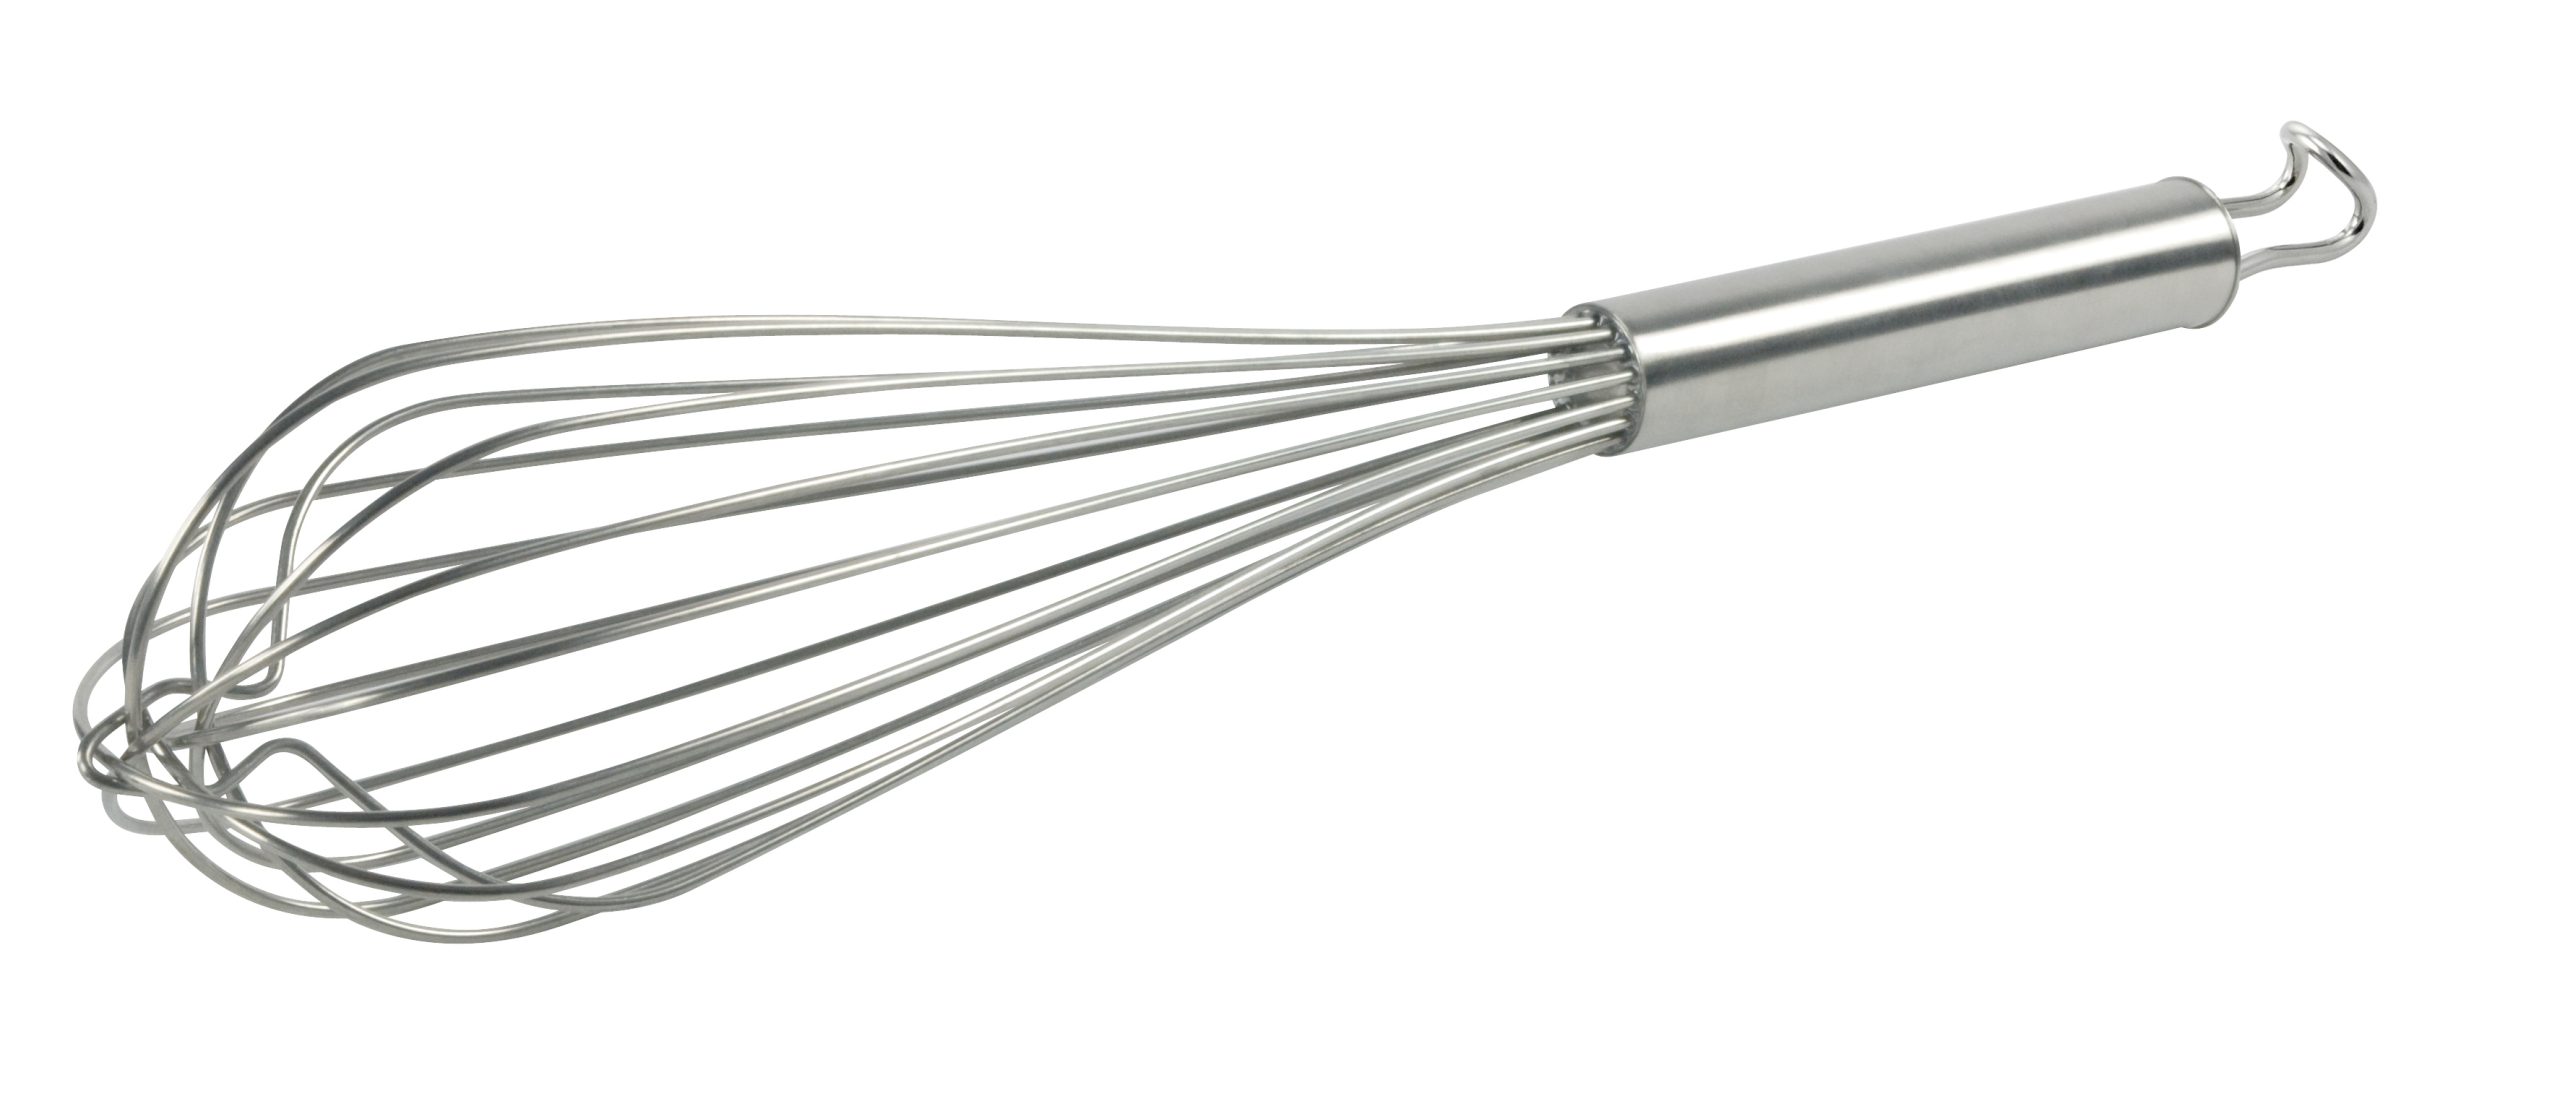 Professional Kitchen whisk 8 wires / 45CM - Stainless steel 18/10 ILSA